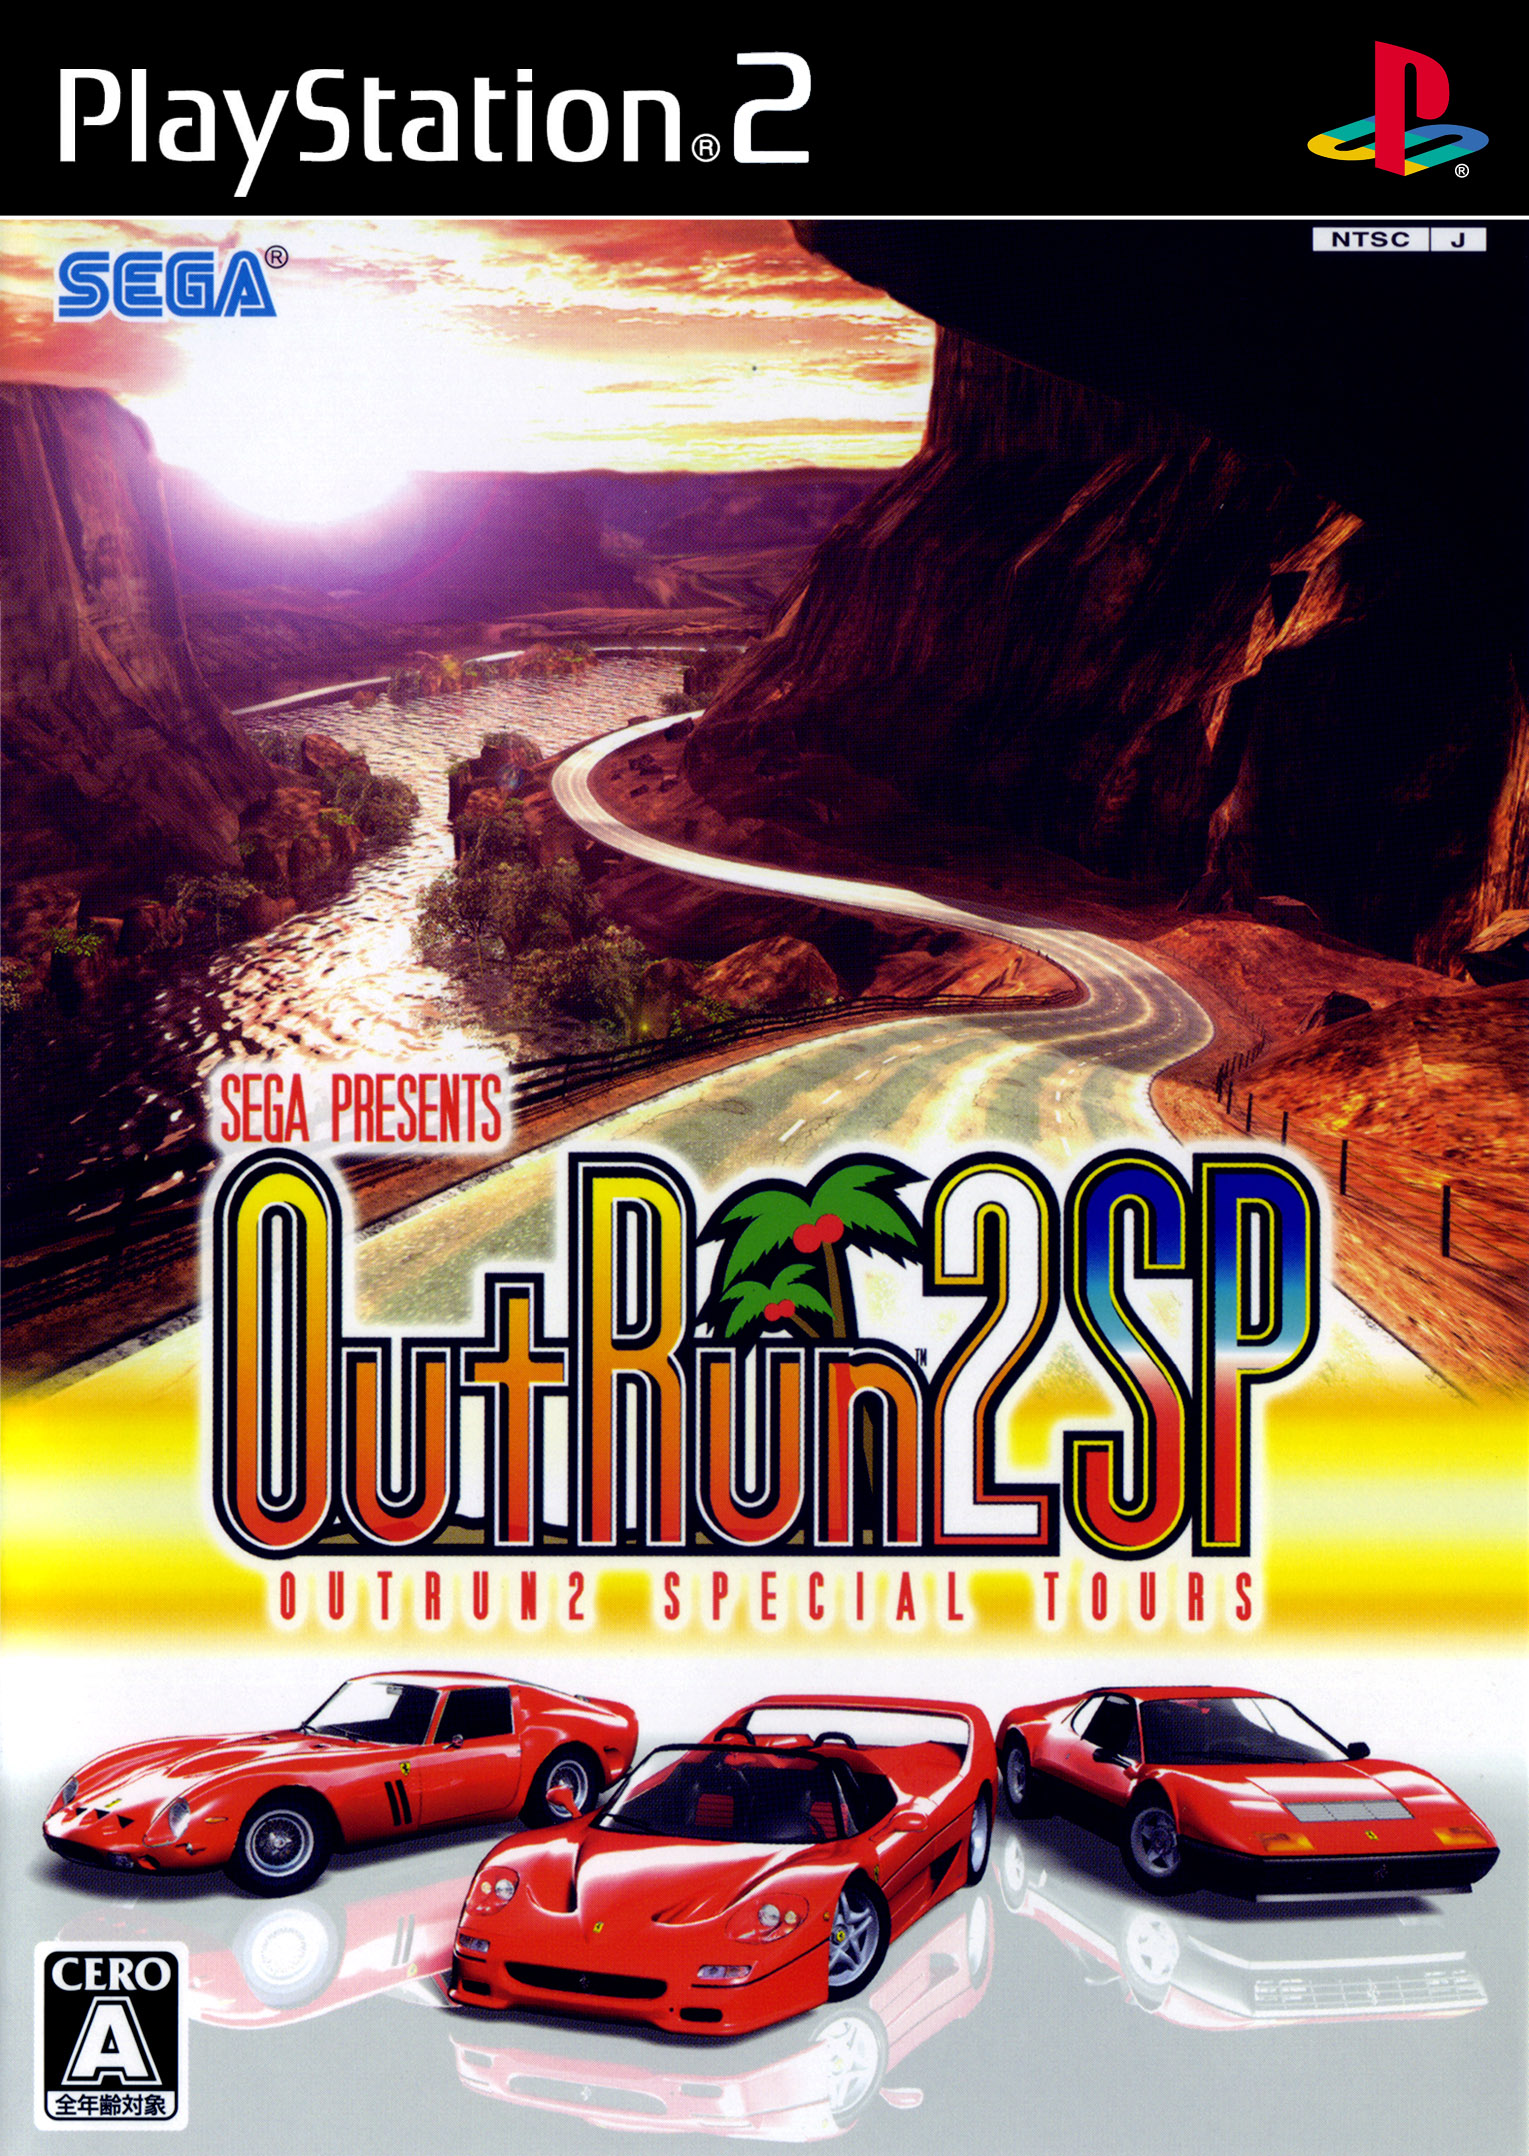 PS2 OutRun2SP アウトラン２スペシャルツアーズ - ゲーム